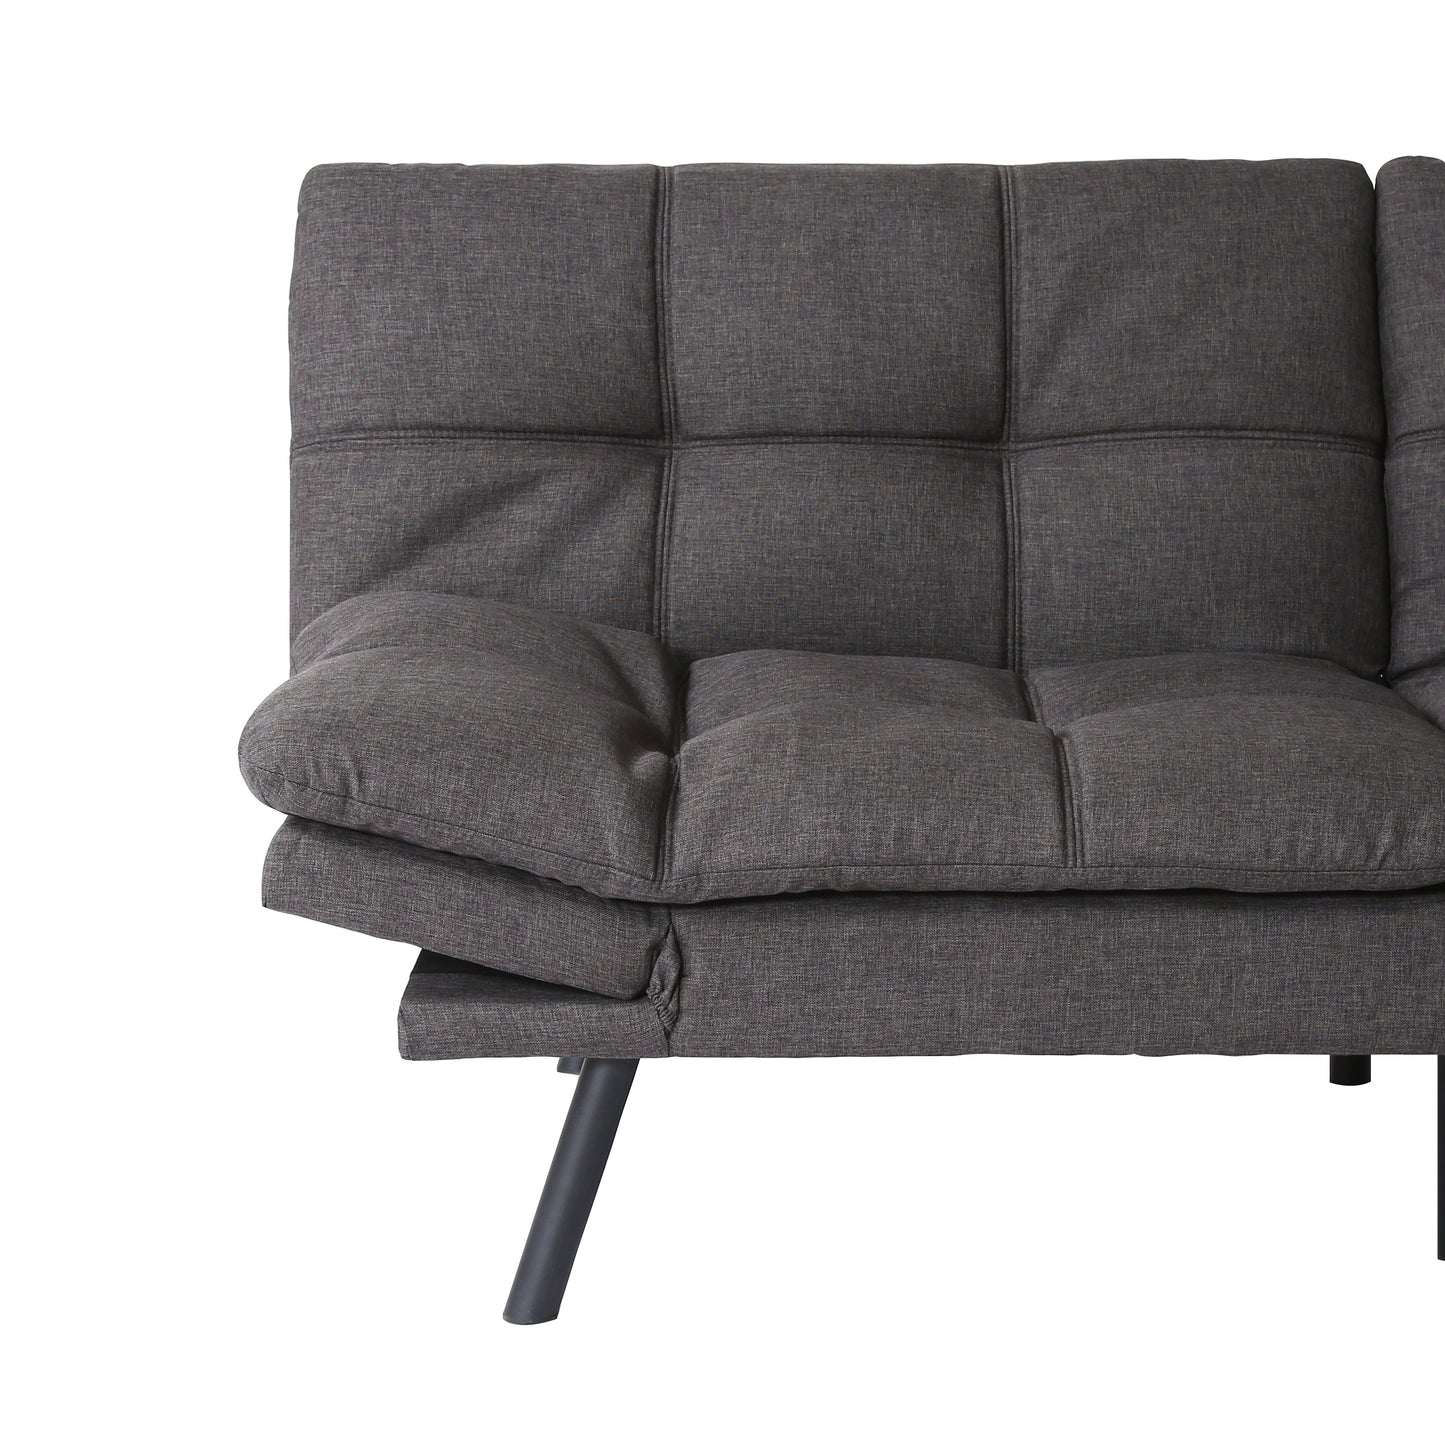 Convertible Futon Couch Modern Folding Sleeper Sofa